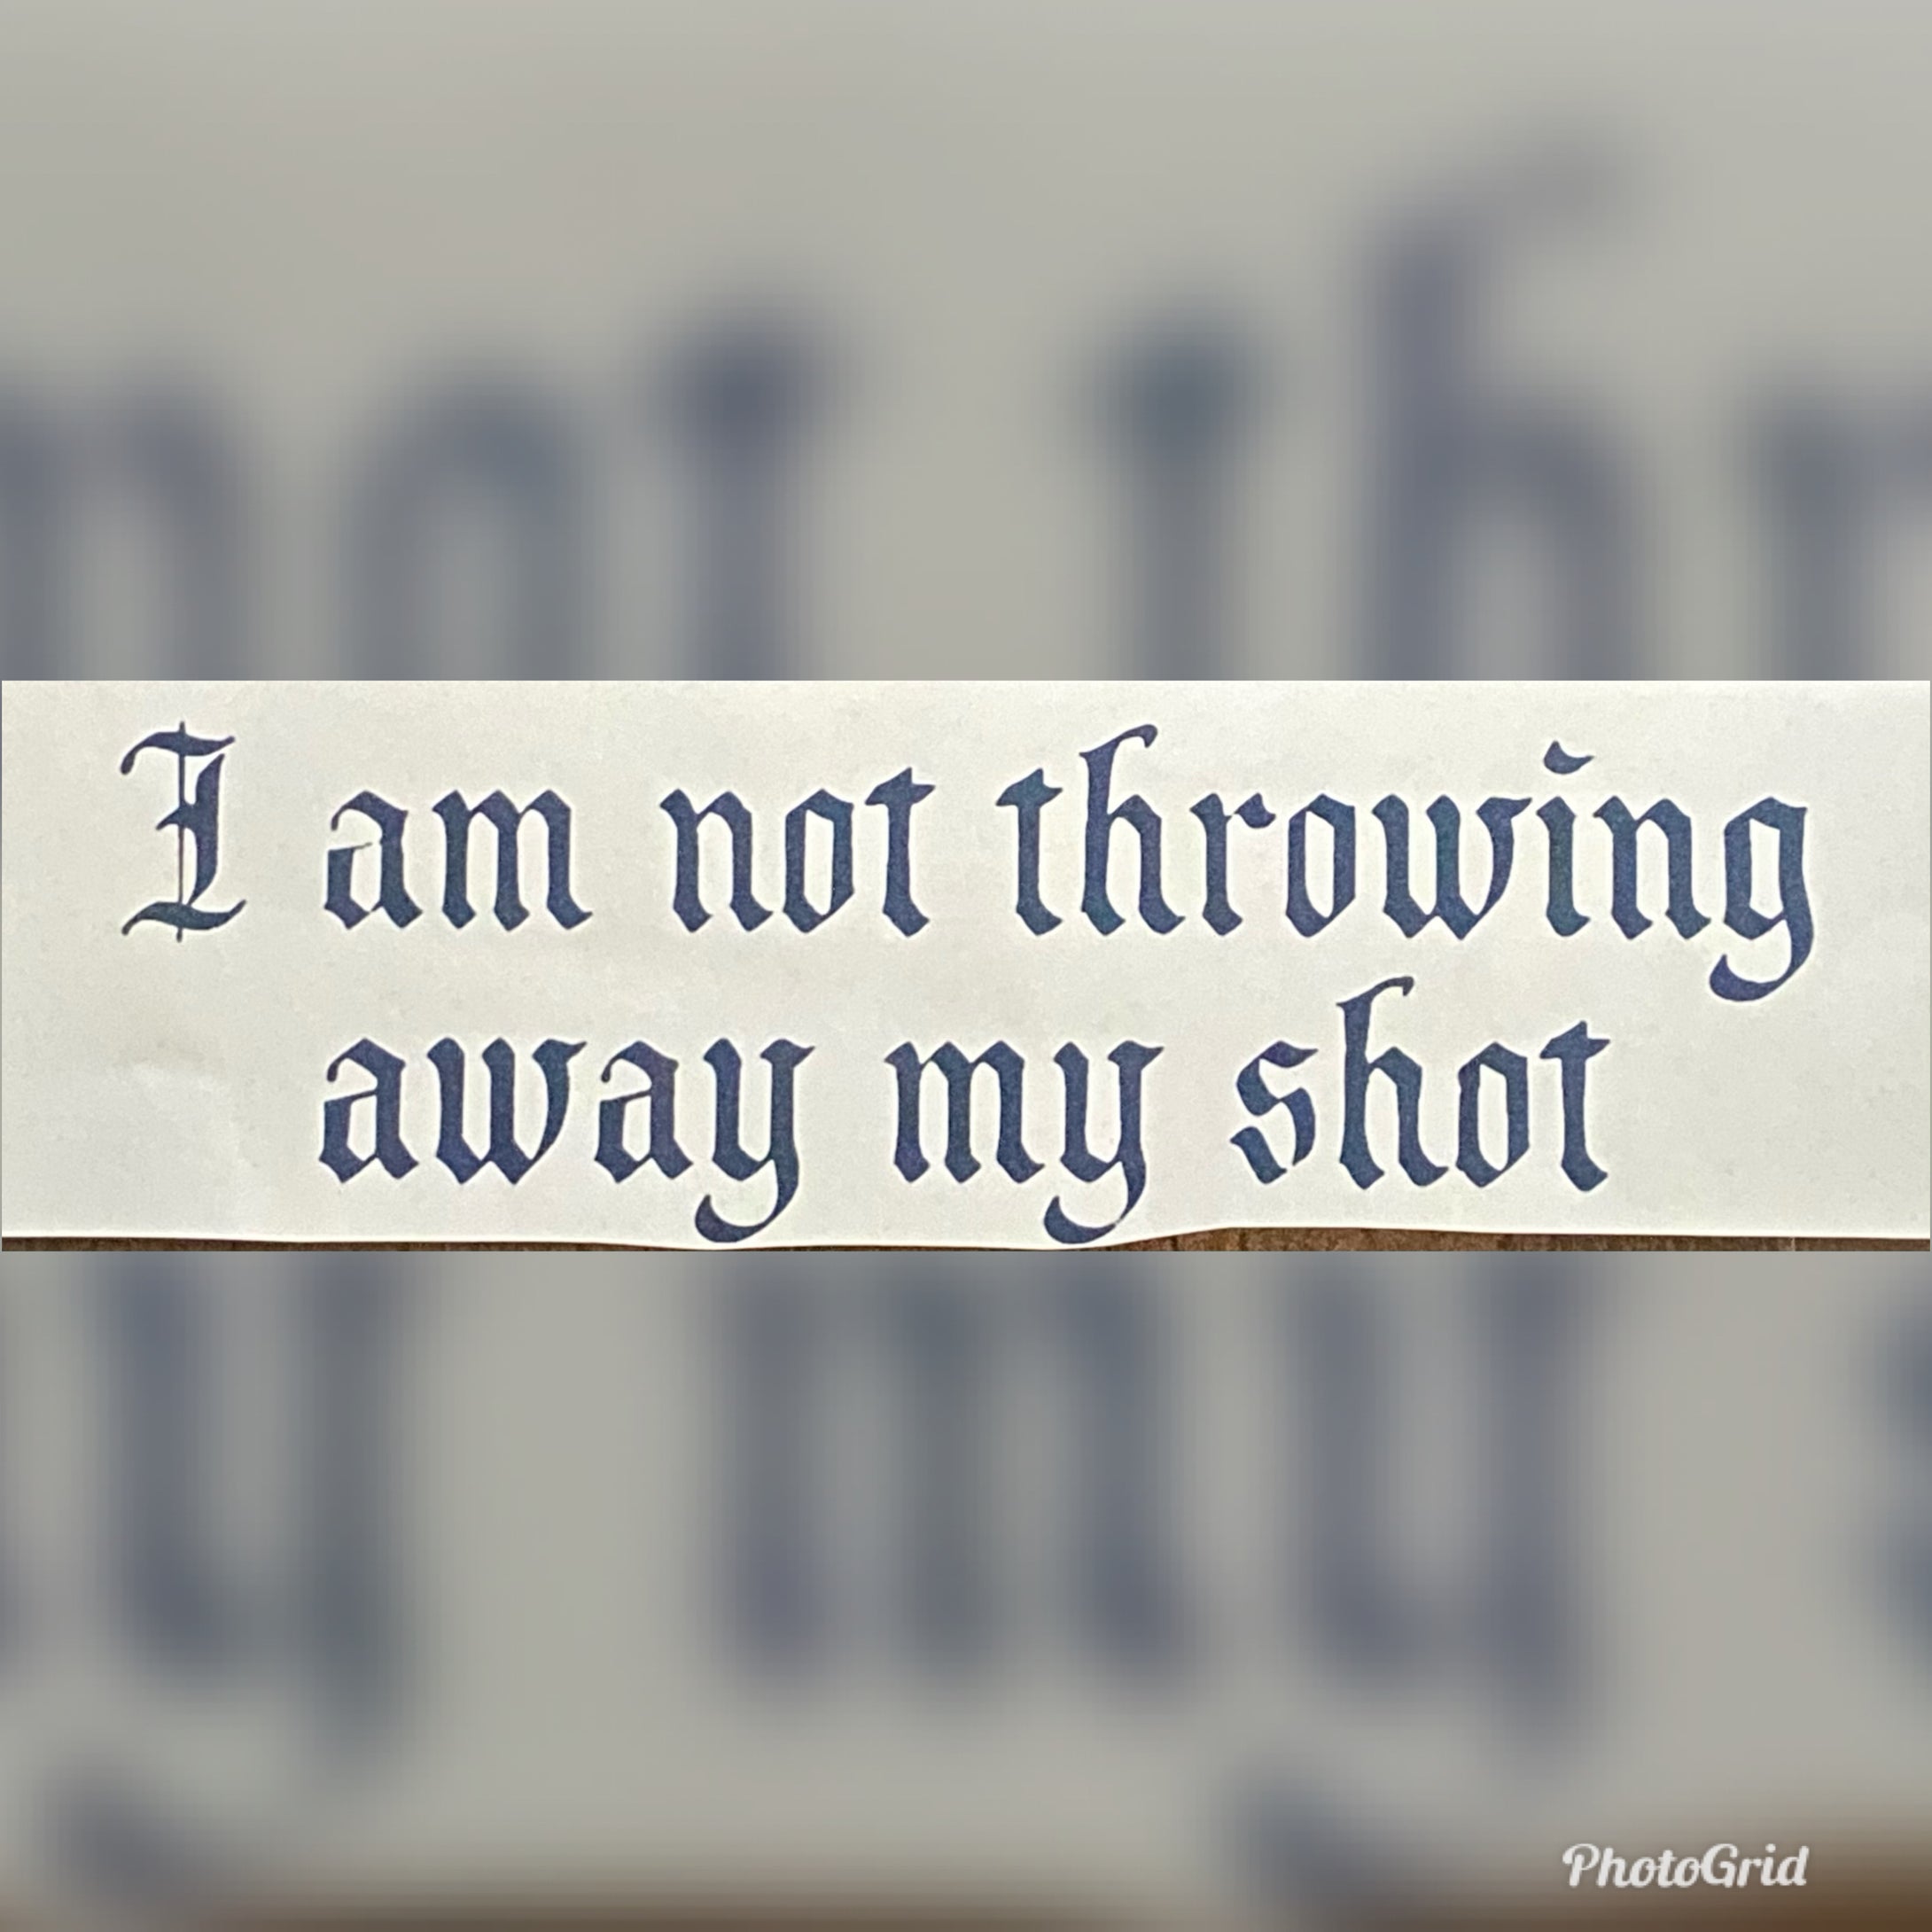 I am not throwing away my shot